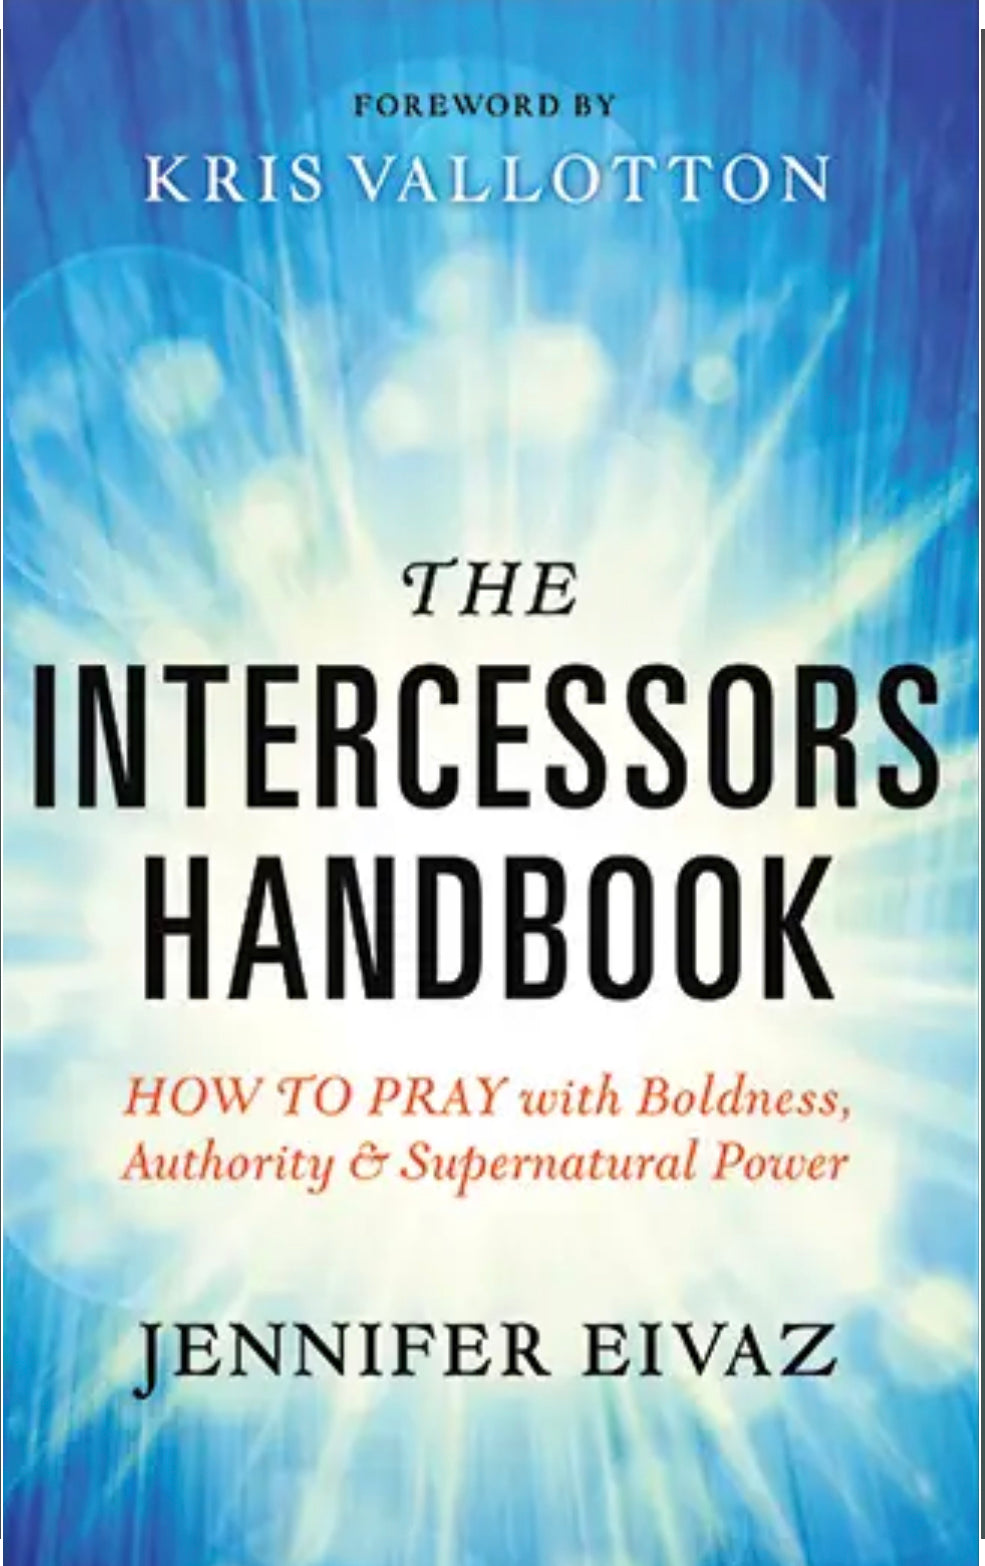 The Intercessor's Handbook